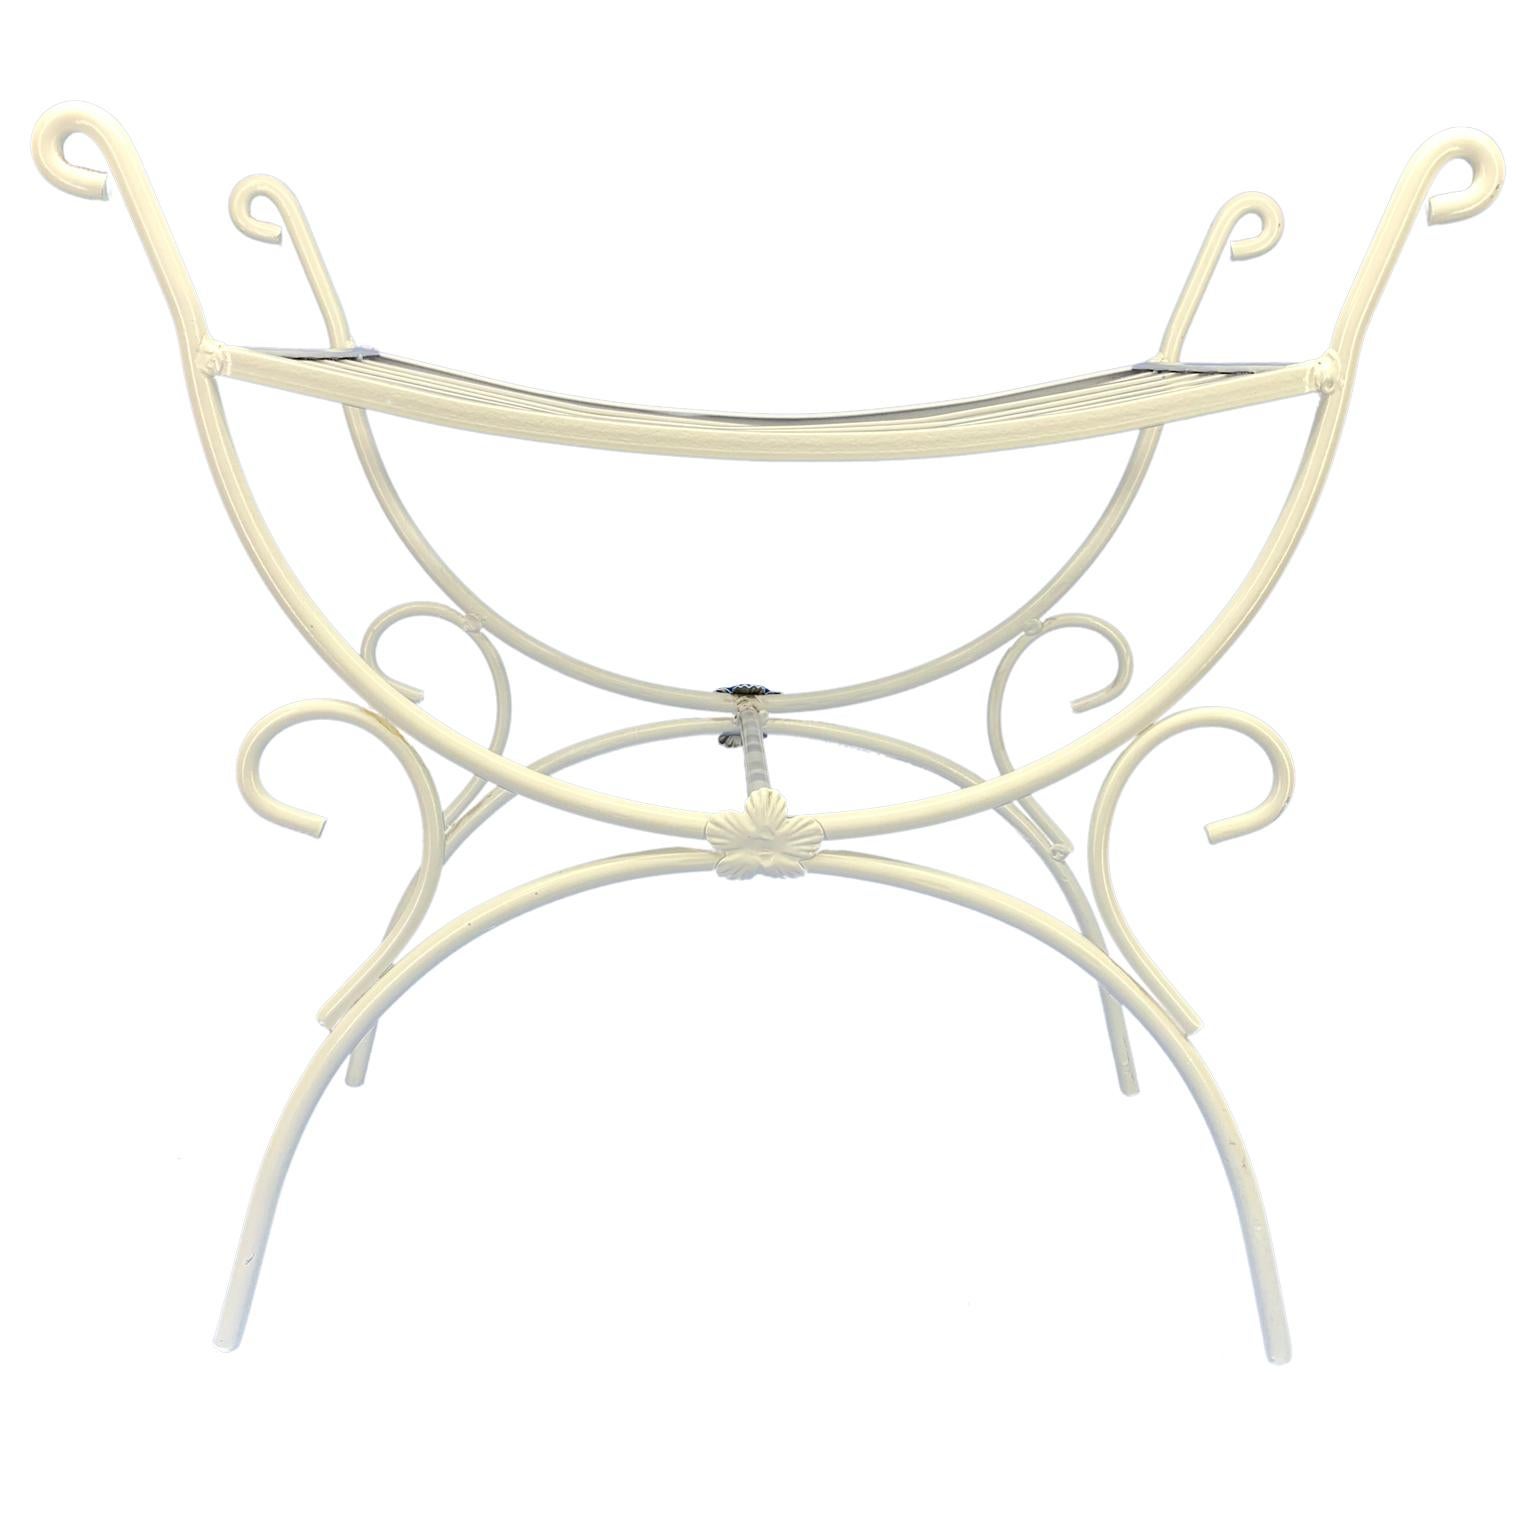 White powder-coated metal stool or bench.